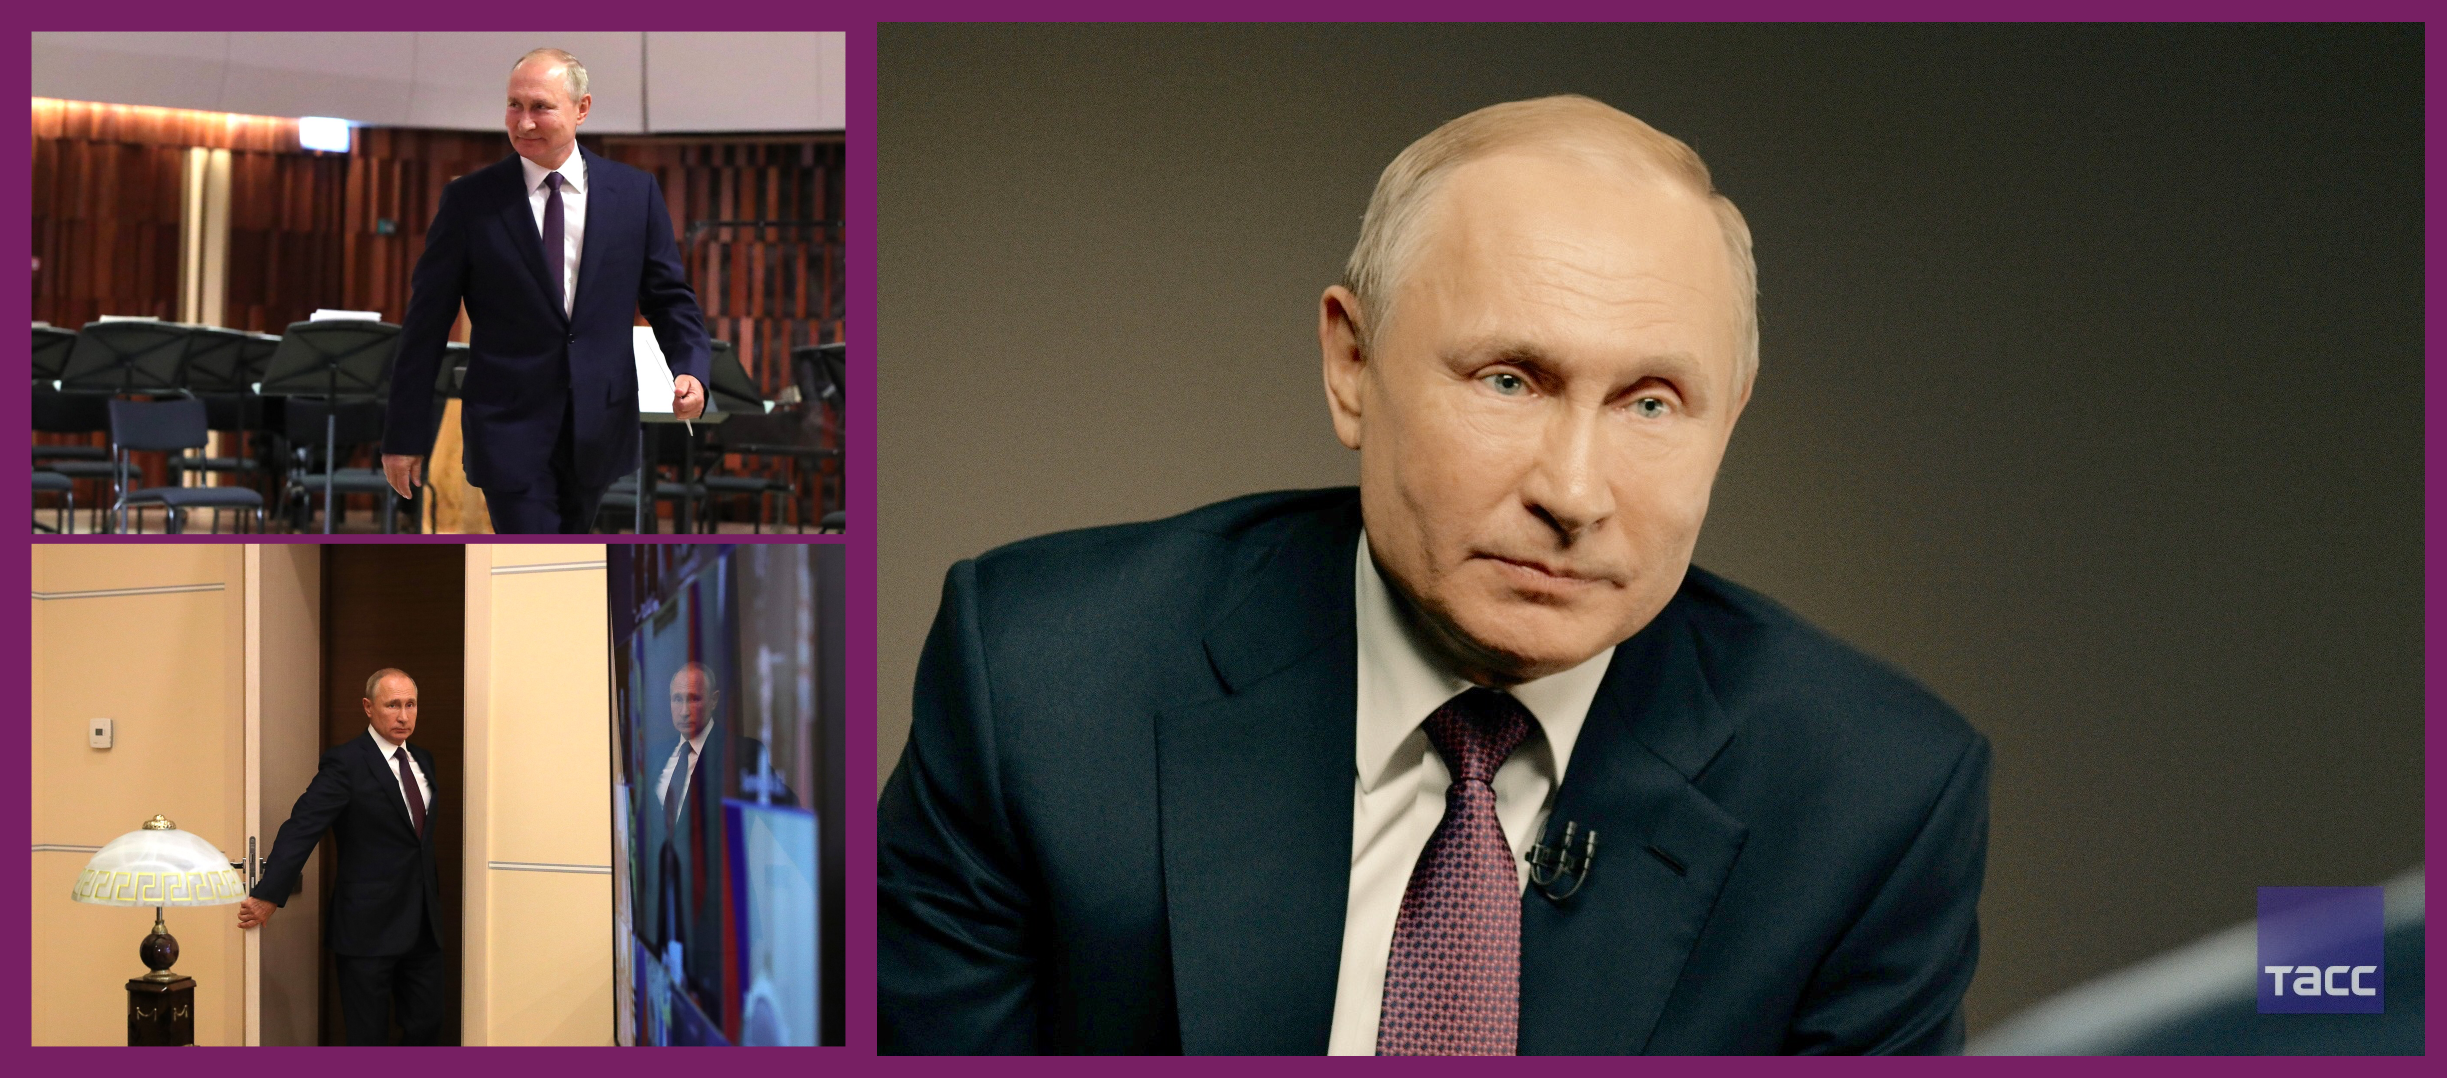 Putin's birthday interview to Tass in 2020 Blank Meme Template